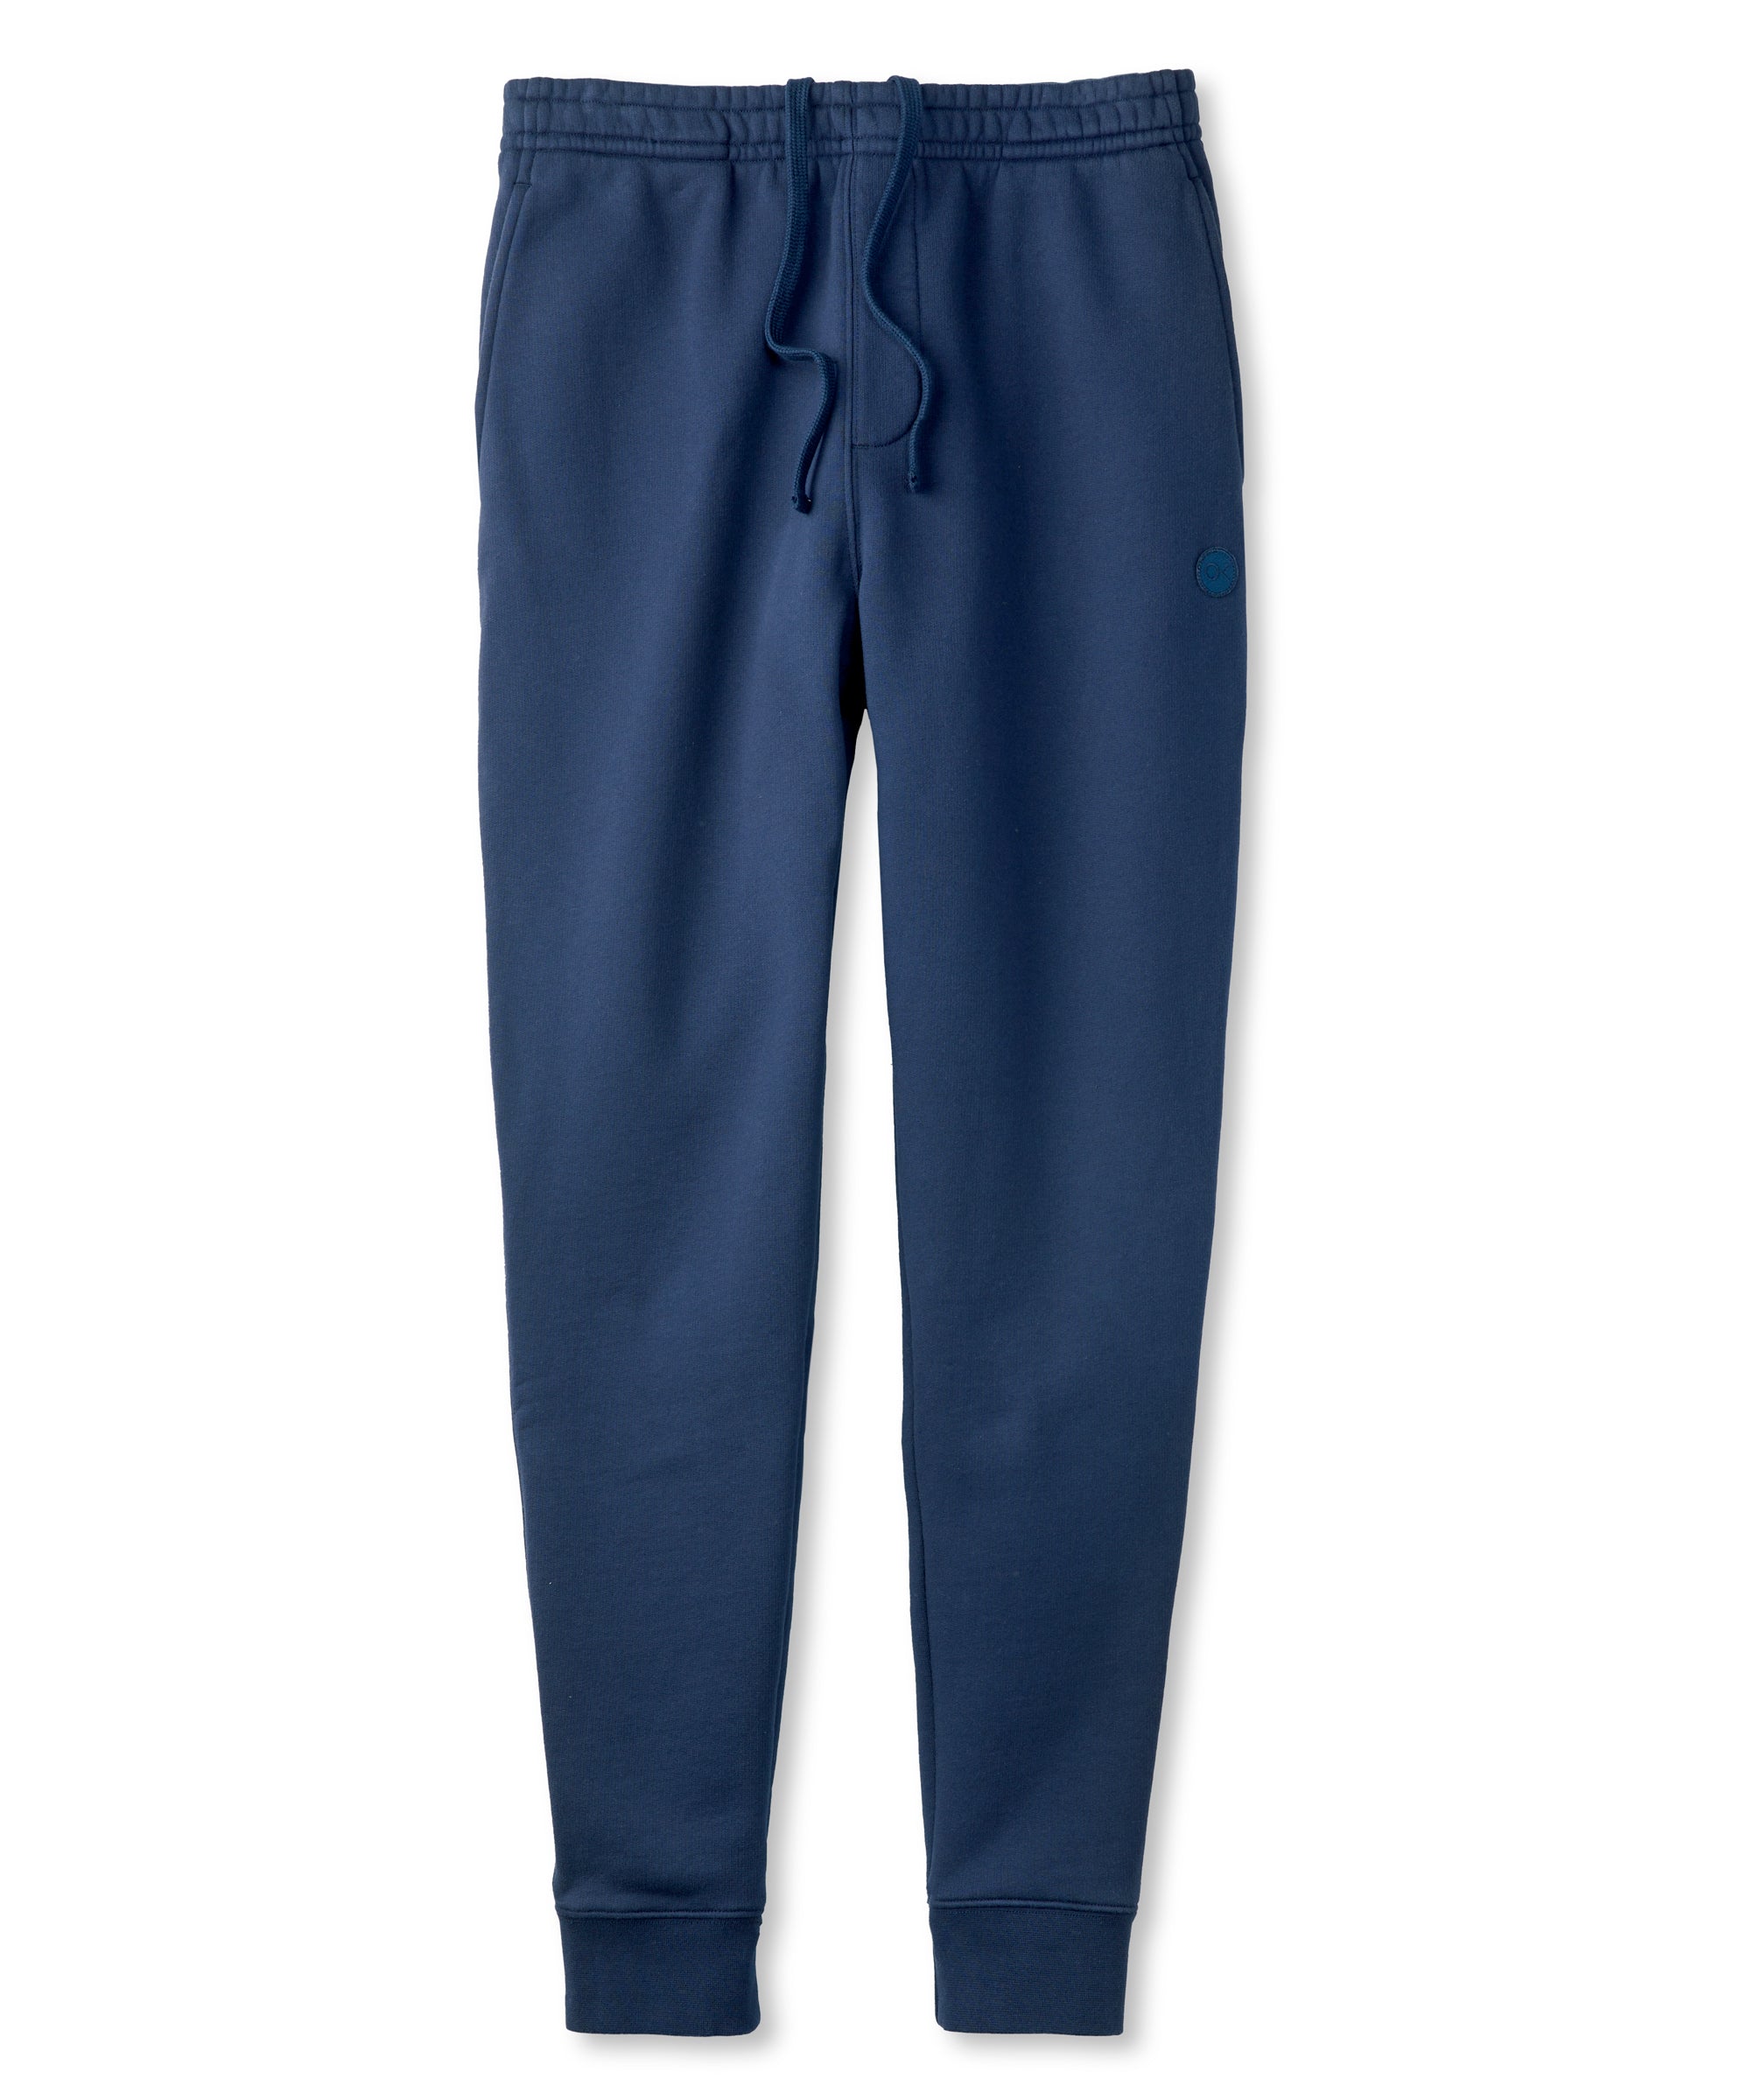 Men's Sweatpants / Navy Blue